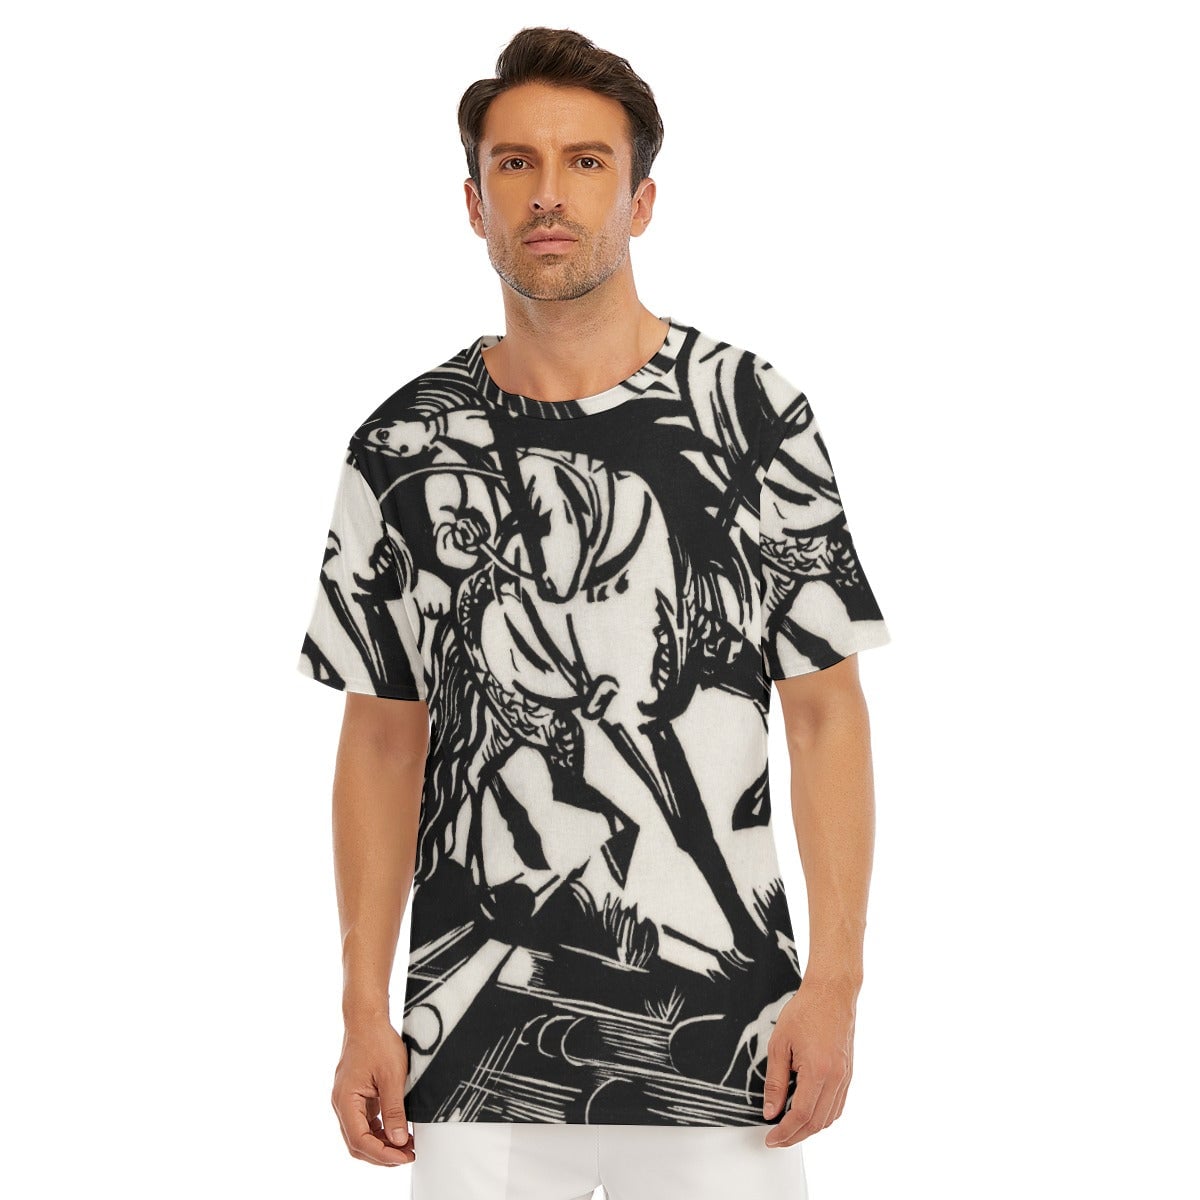 Franz Marc’s The Riding School T-Shirt